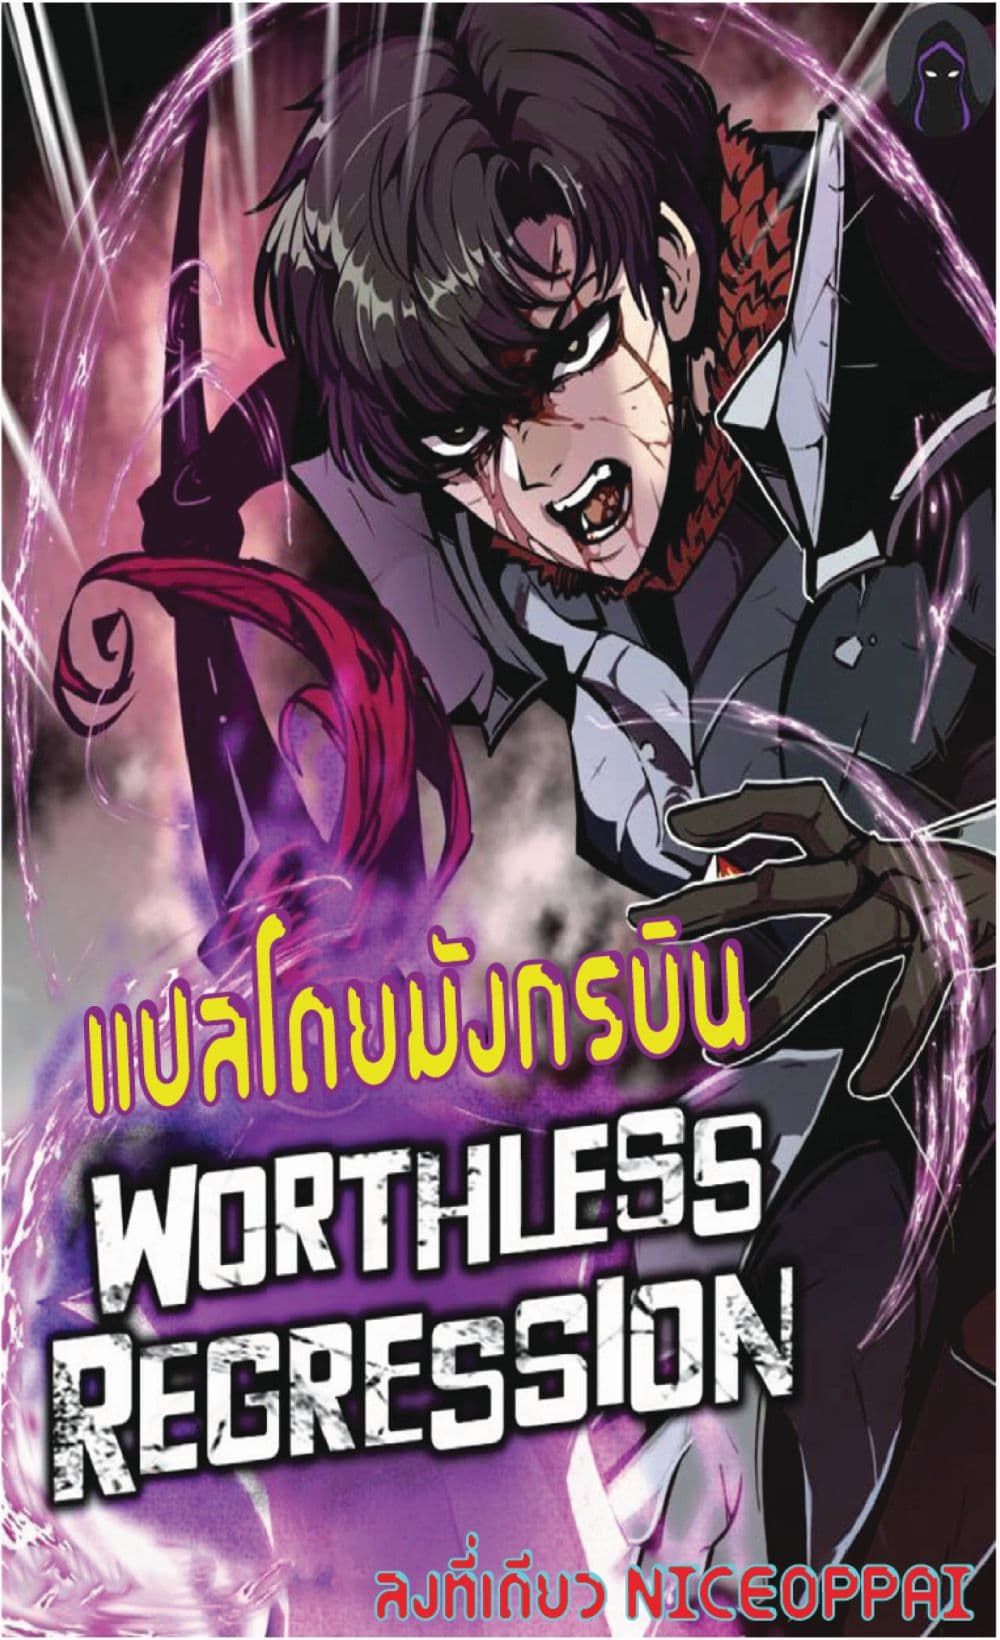 Worthless Regression 18 01